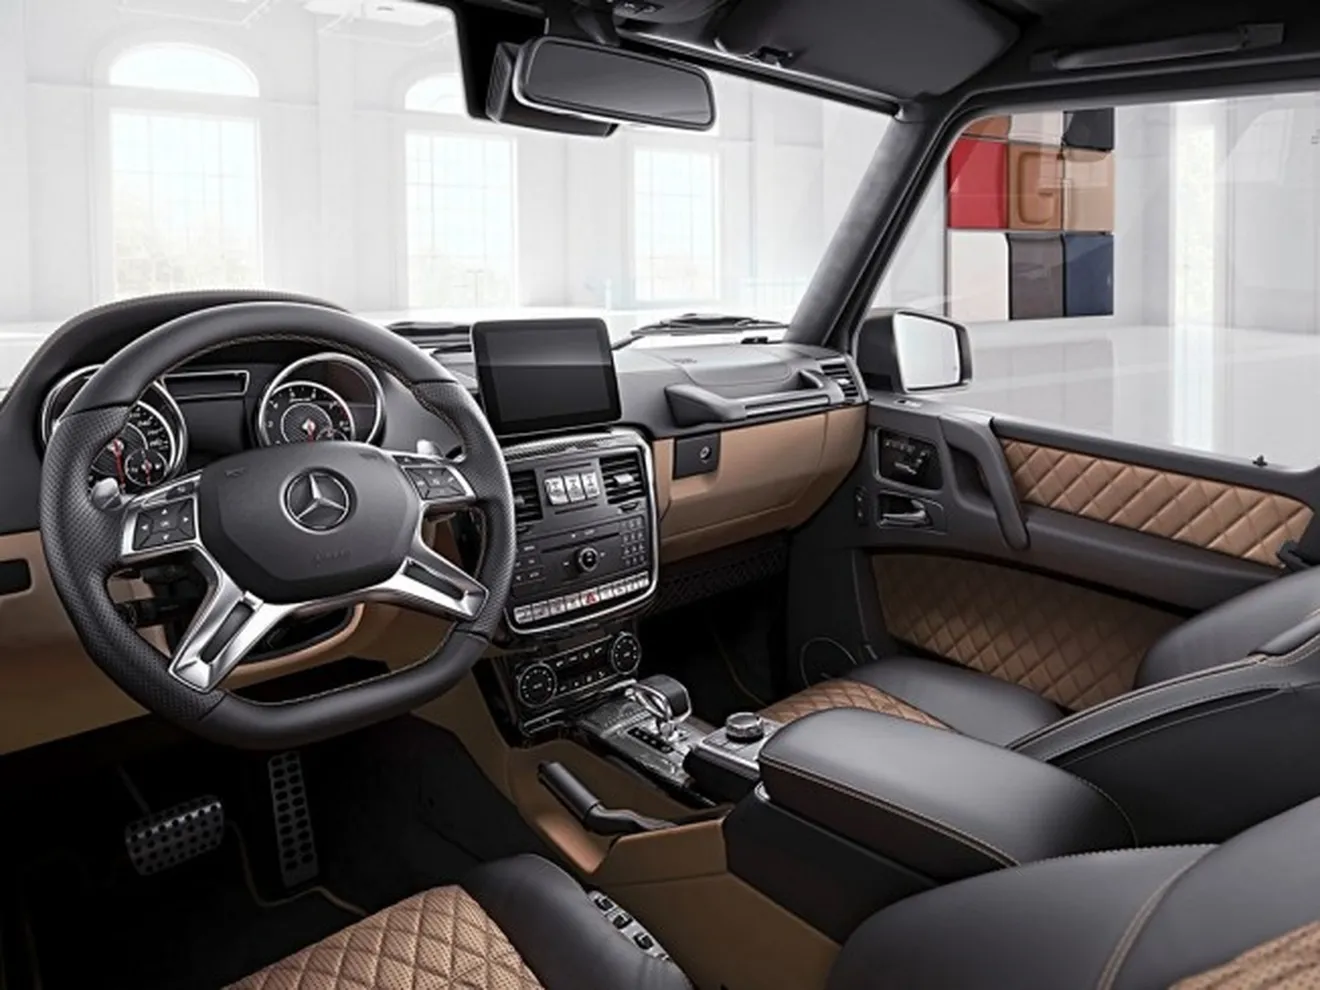  Mercedes G 63 AMG Exclusive Edition - interior